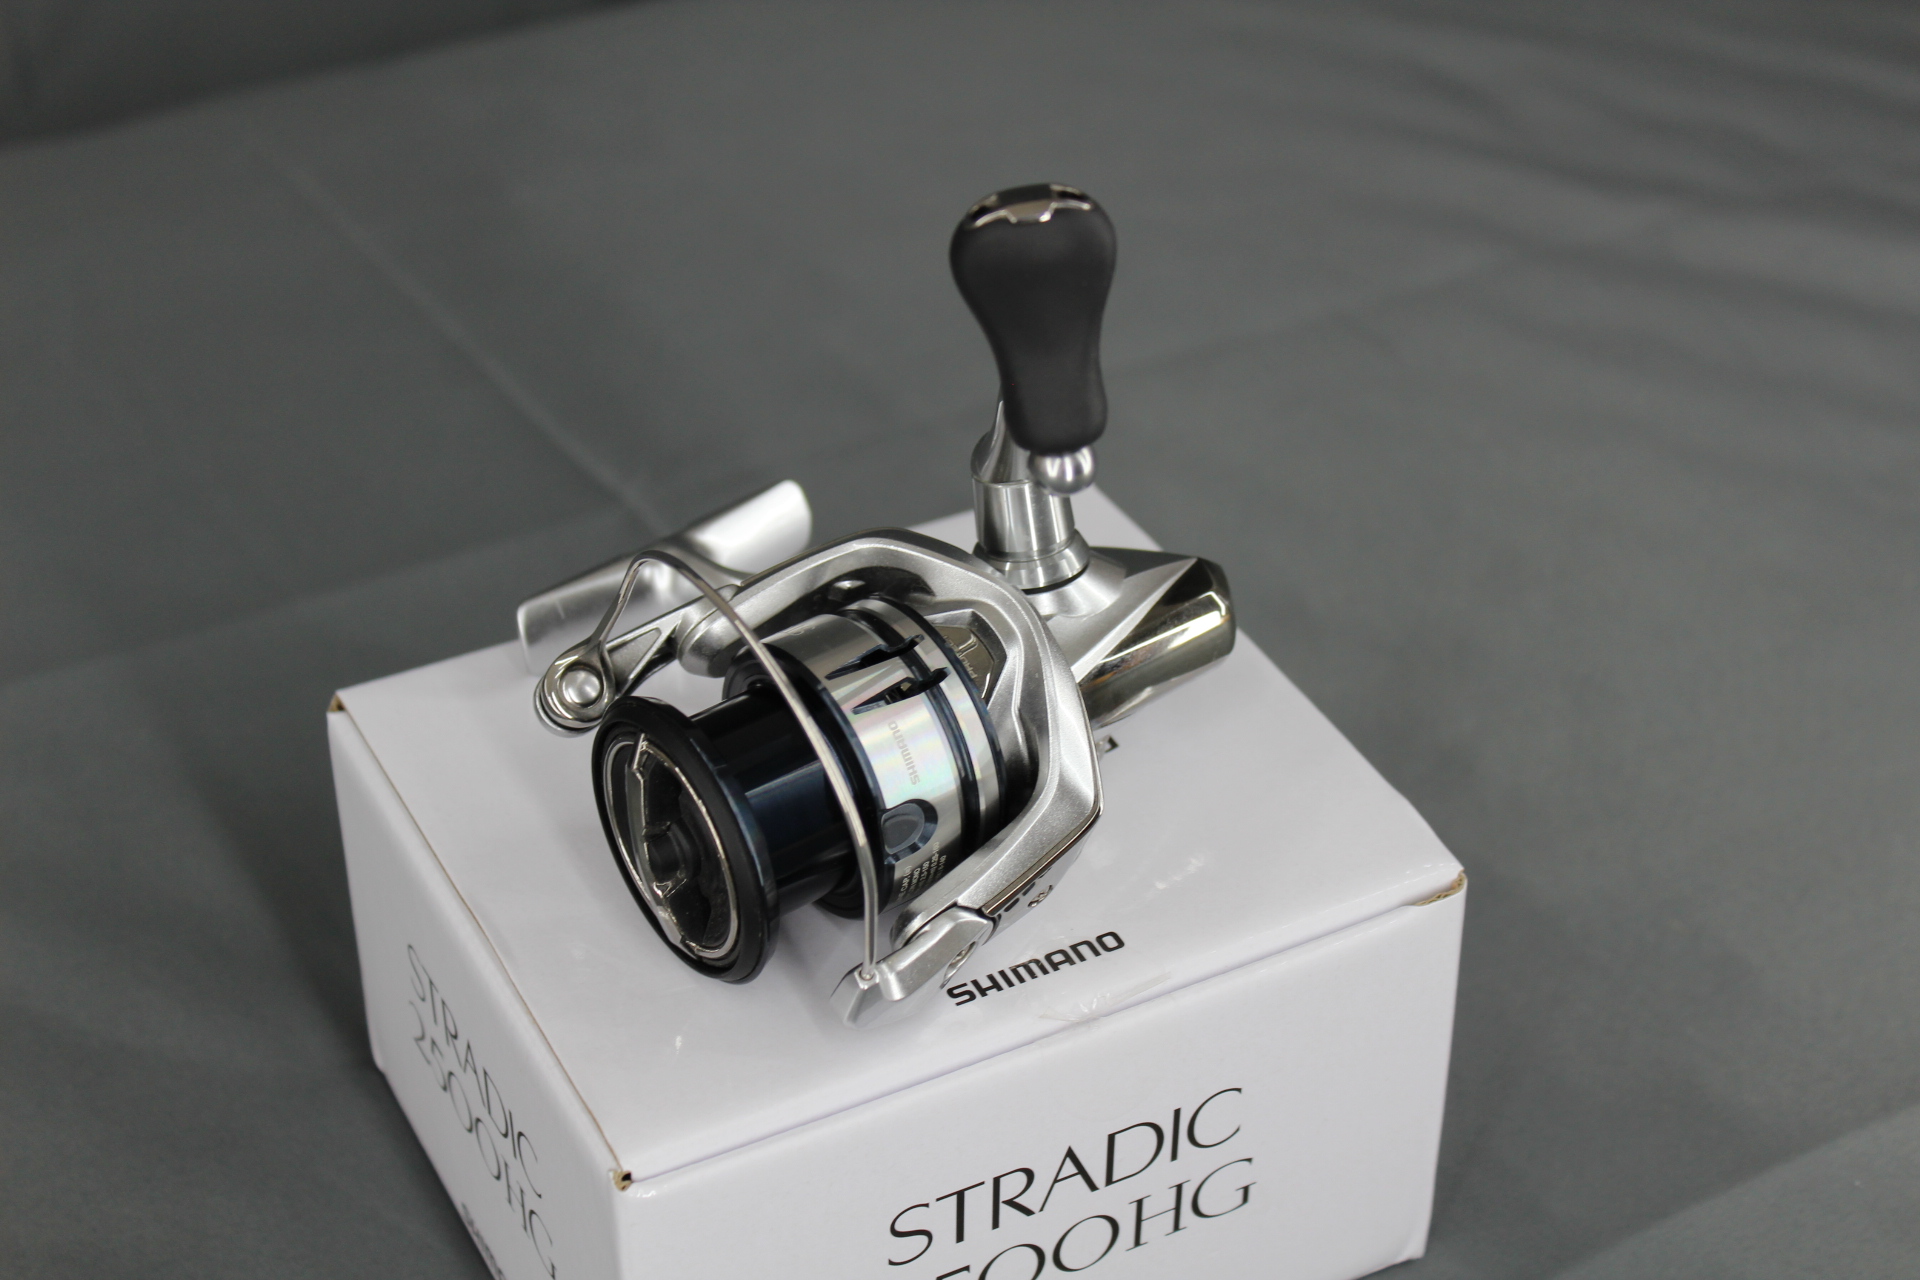 Shimano Stradic 2500 HG